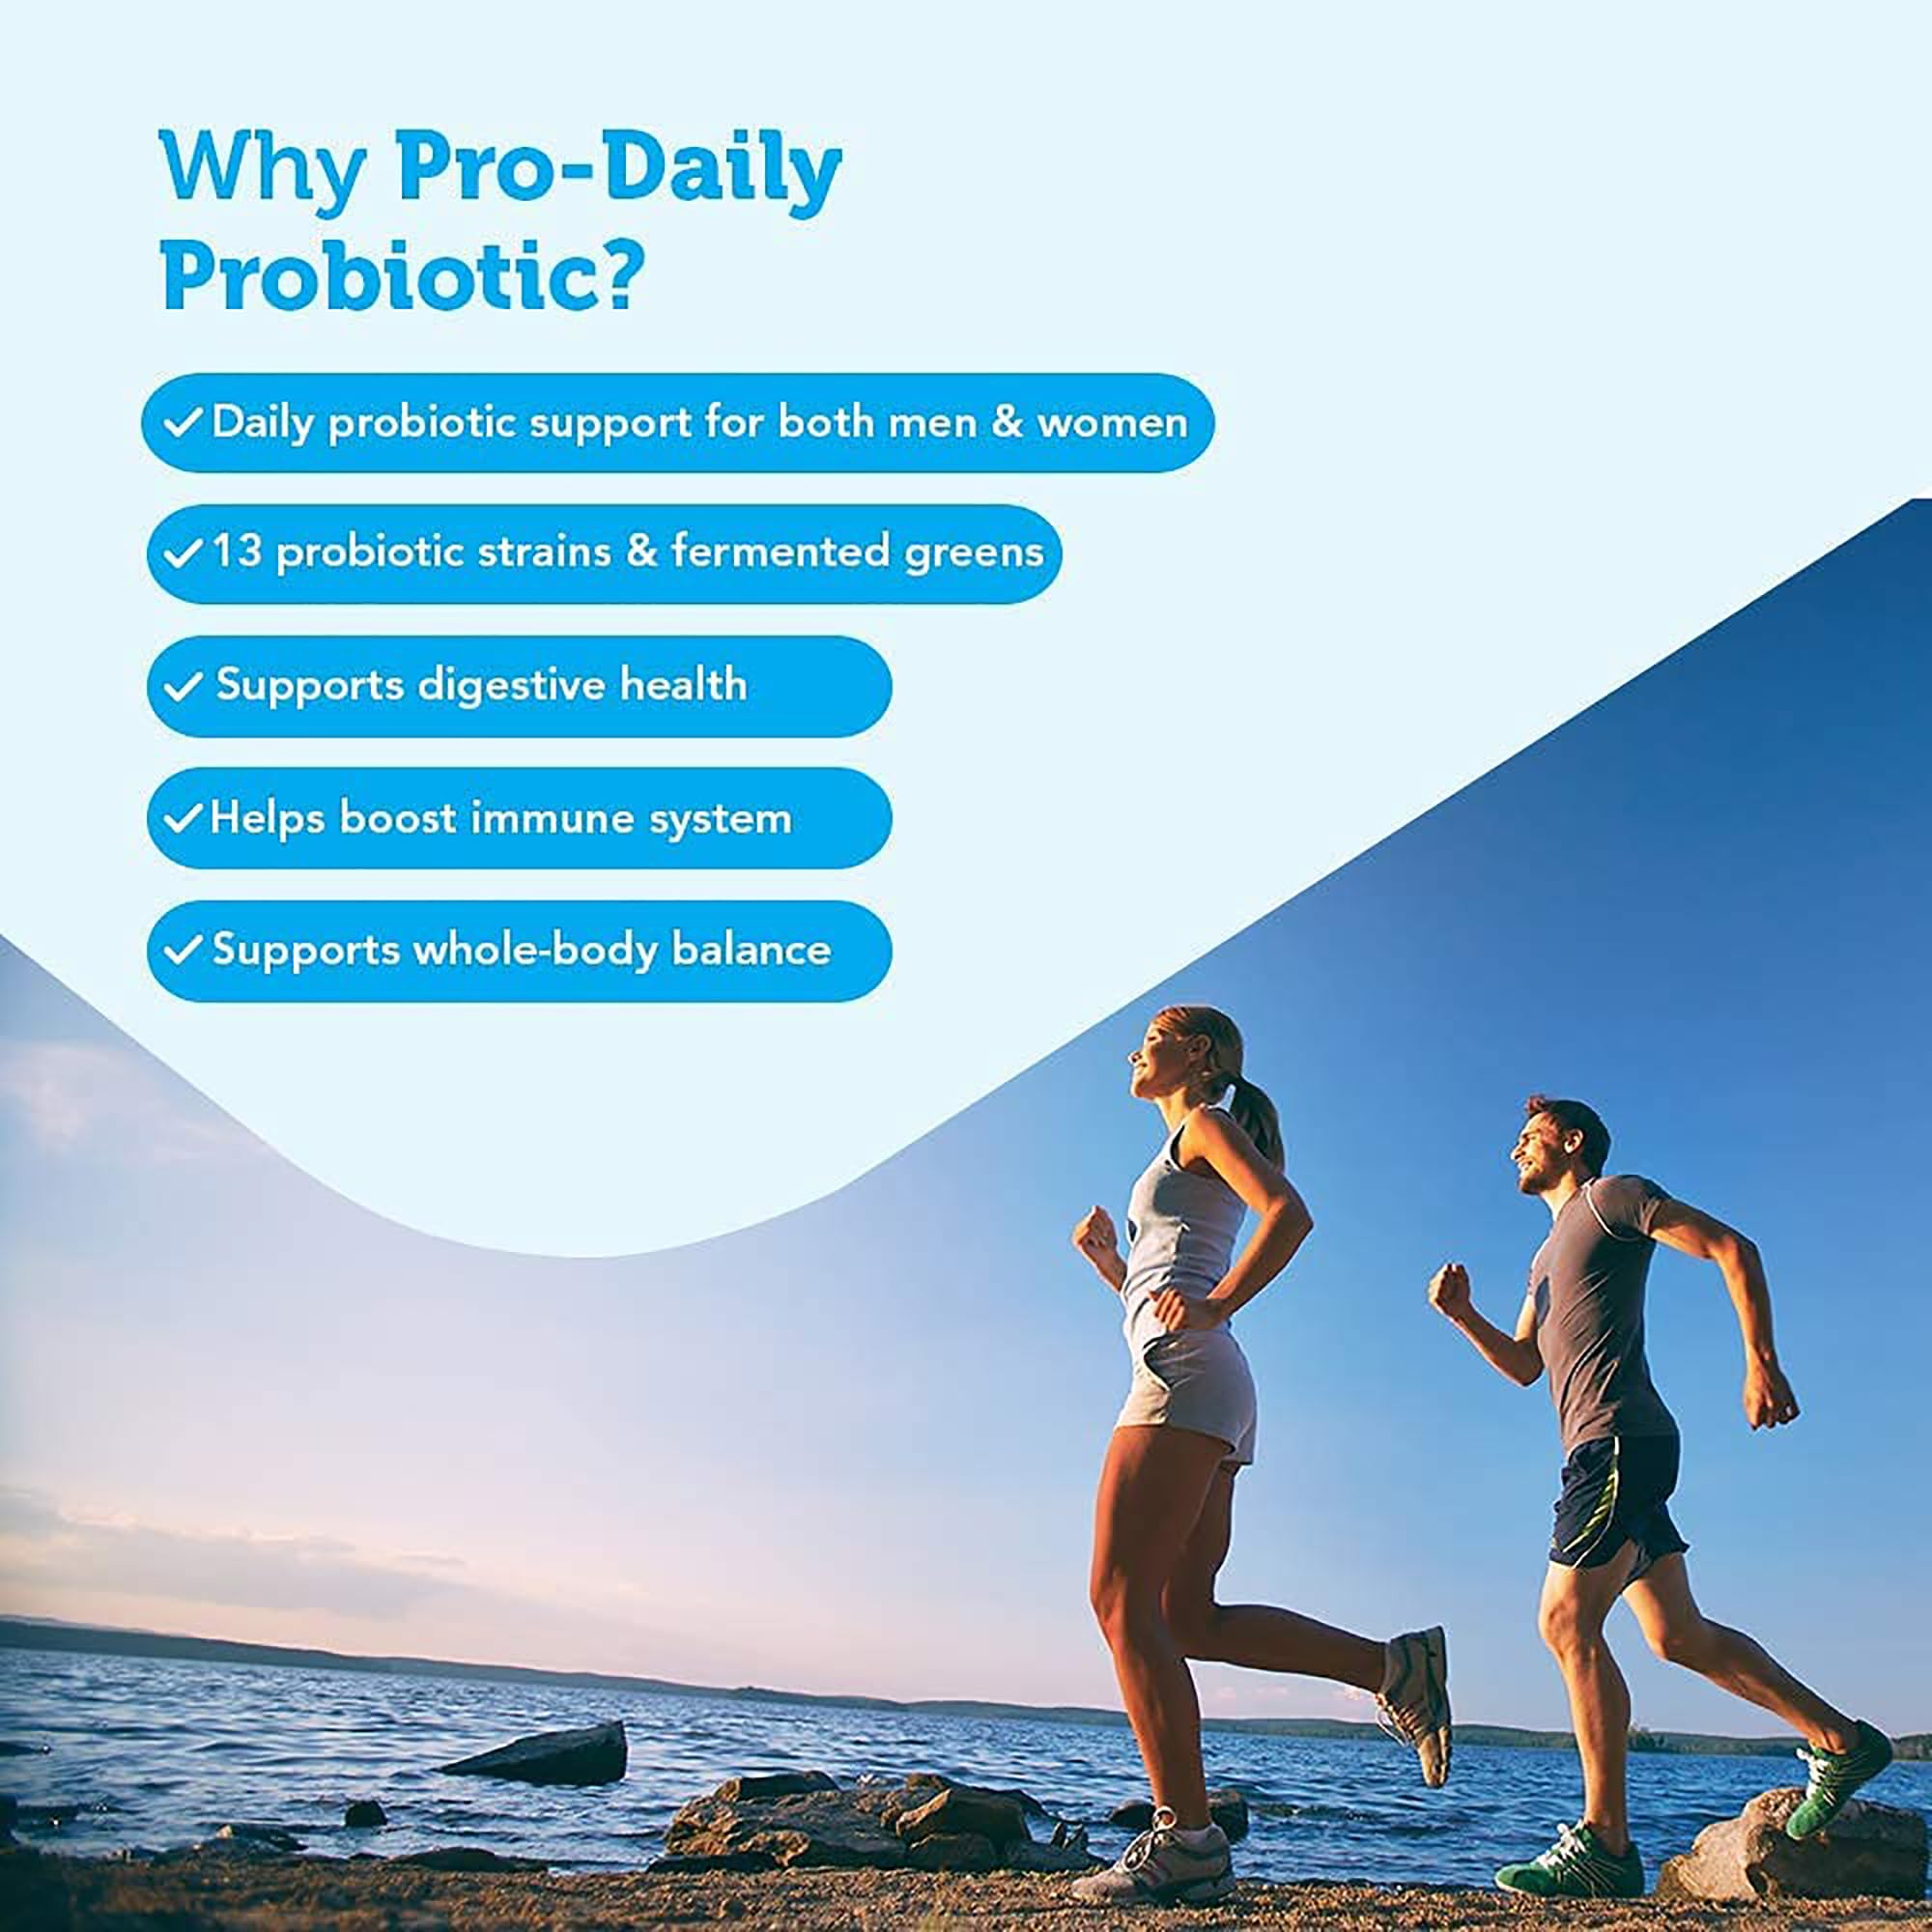 Vitamin Bounty Pro-Daily Probiotic - 13 Probiotic Strains, Gut Health, Digestive Health, Including Lactobacillus Acidophilus, Probiotic for Women and Men - 30 Capsules